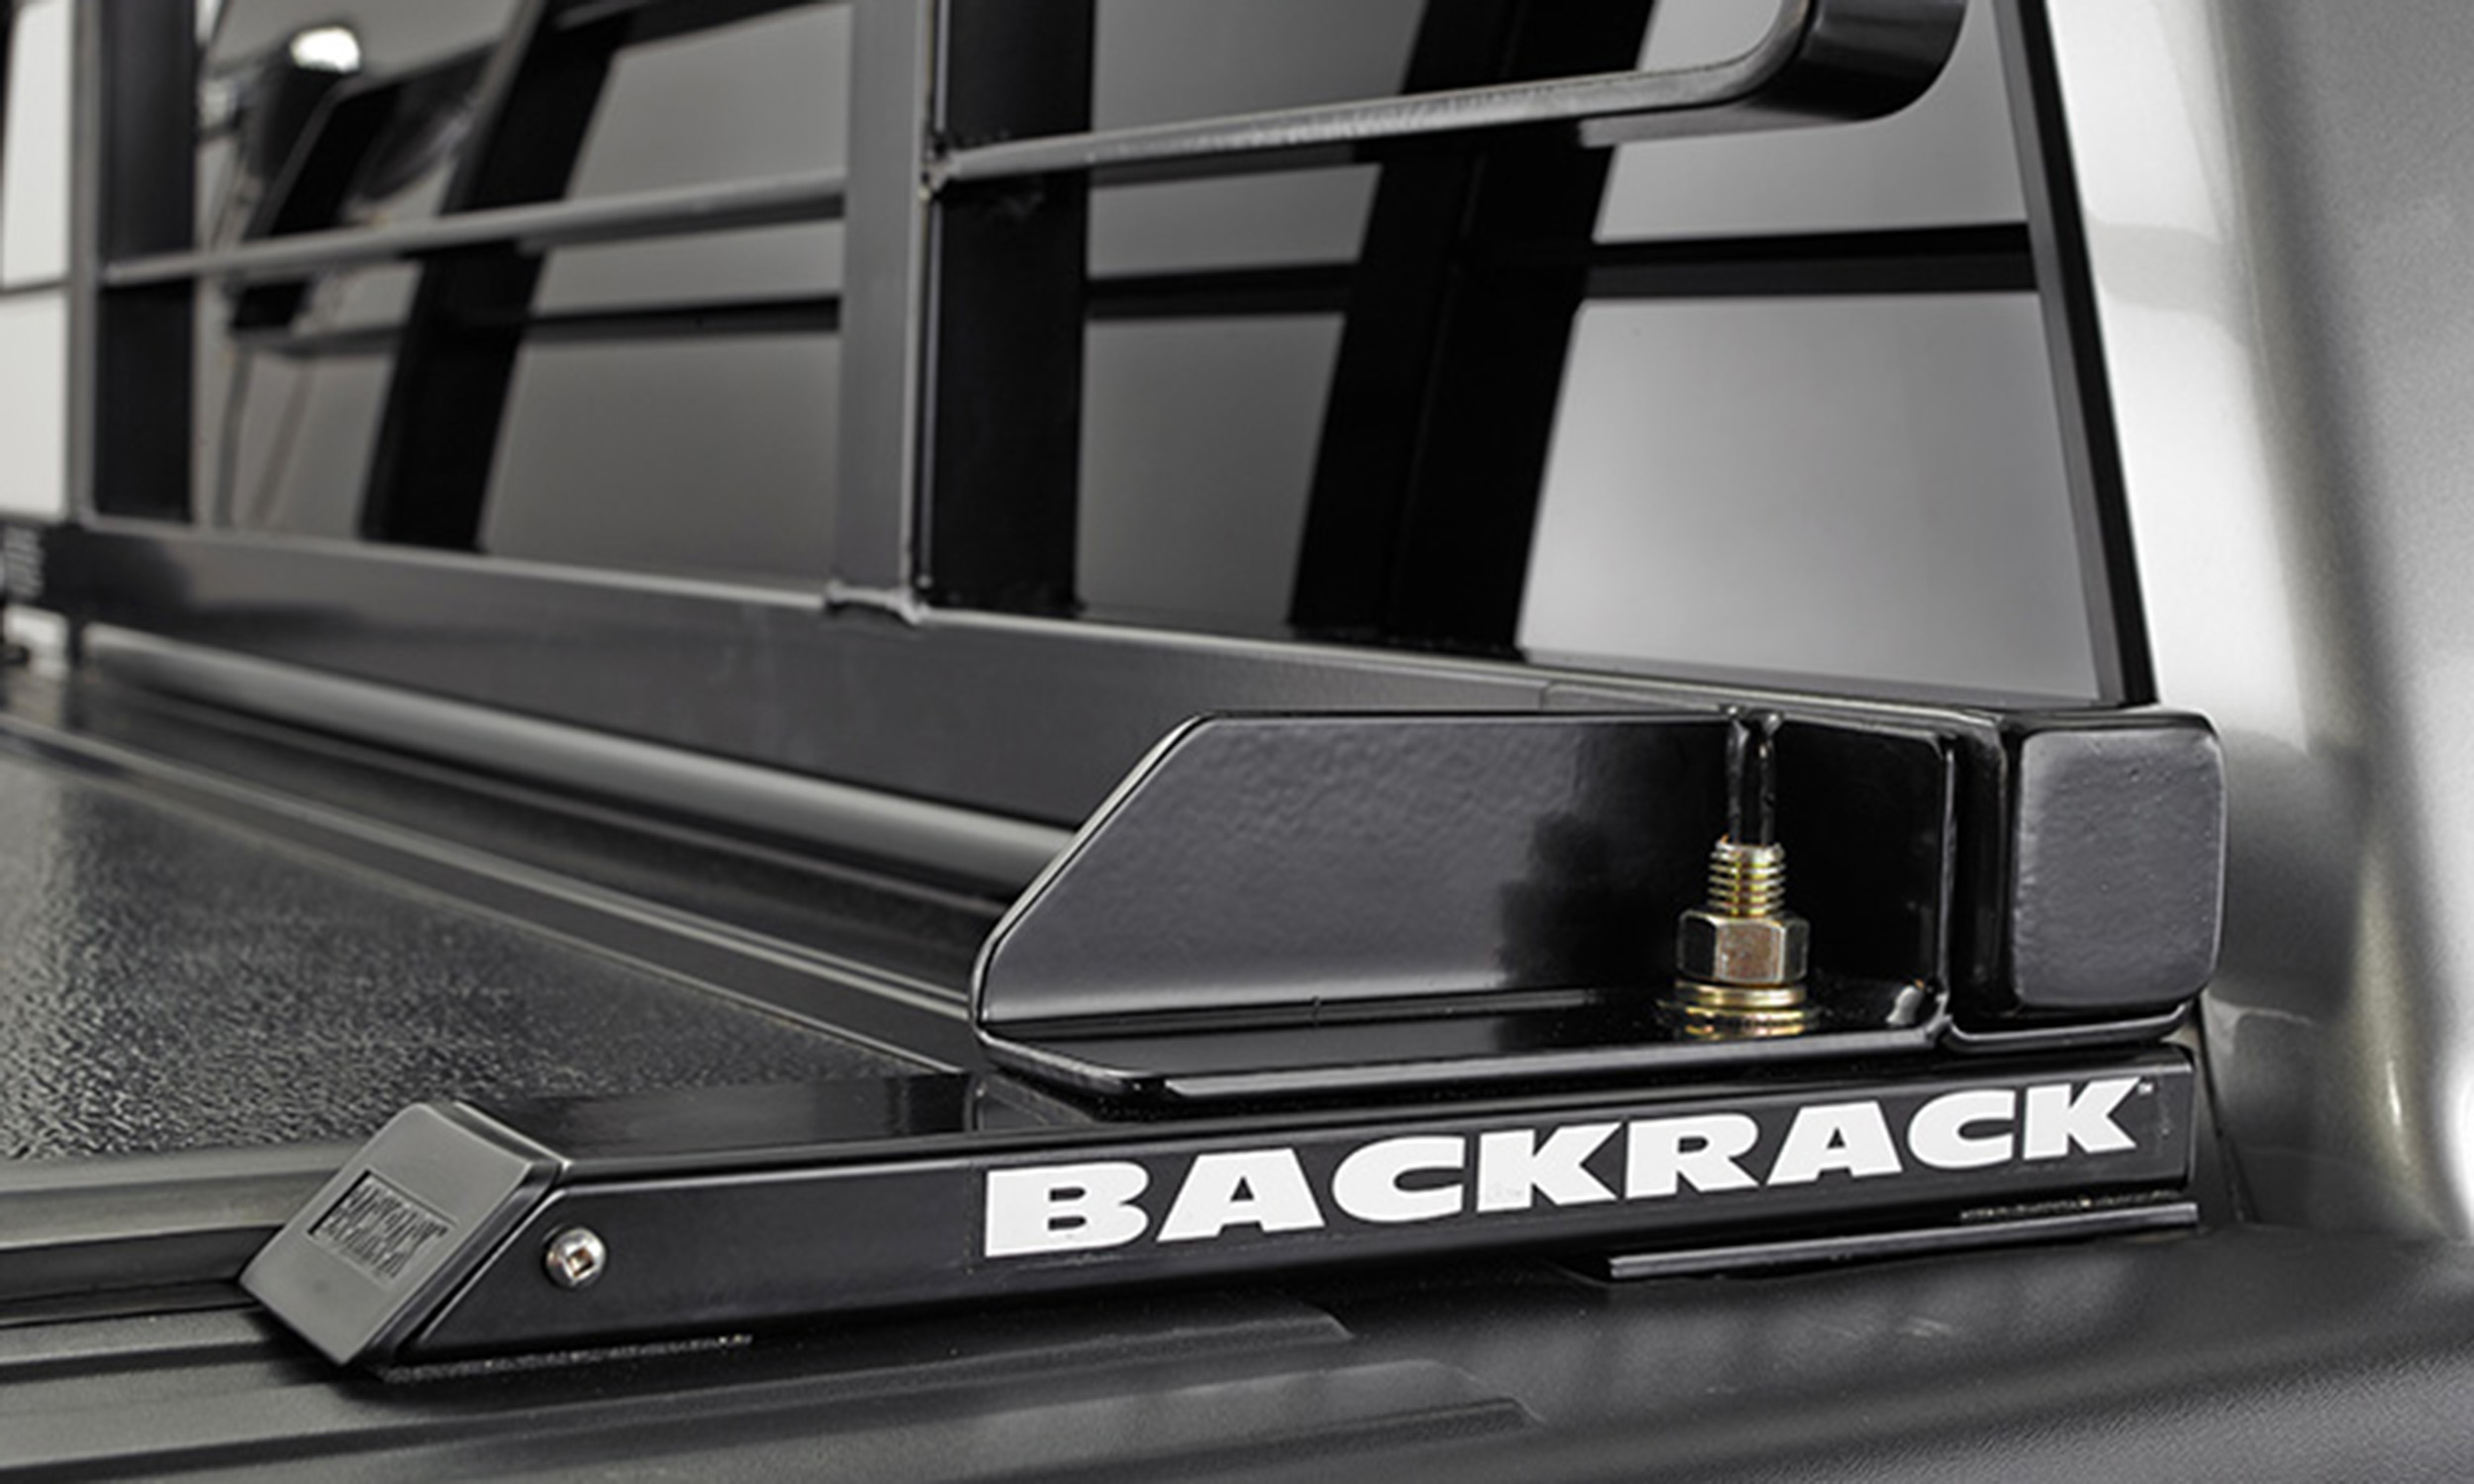 Backrack 40221 Truck Cab Protector / Headache Rack Installation Kit